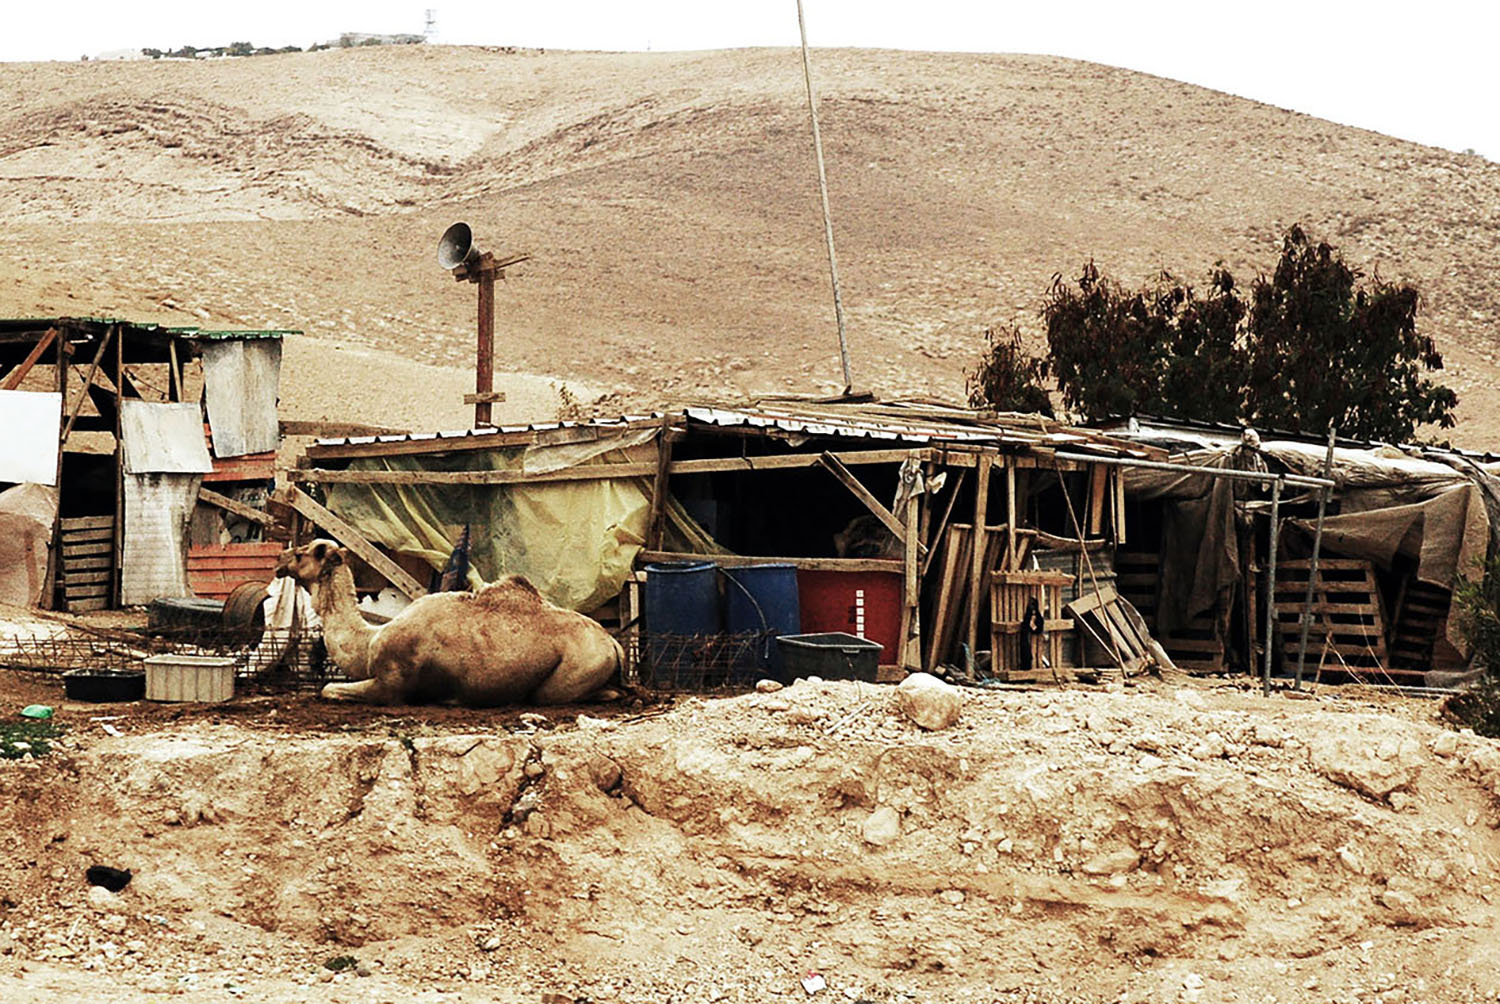 Bedouin_Camp_Muslim_Home_Camel_Shack_Desert_Israel.jpg